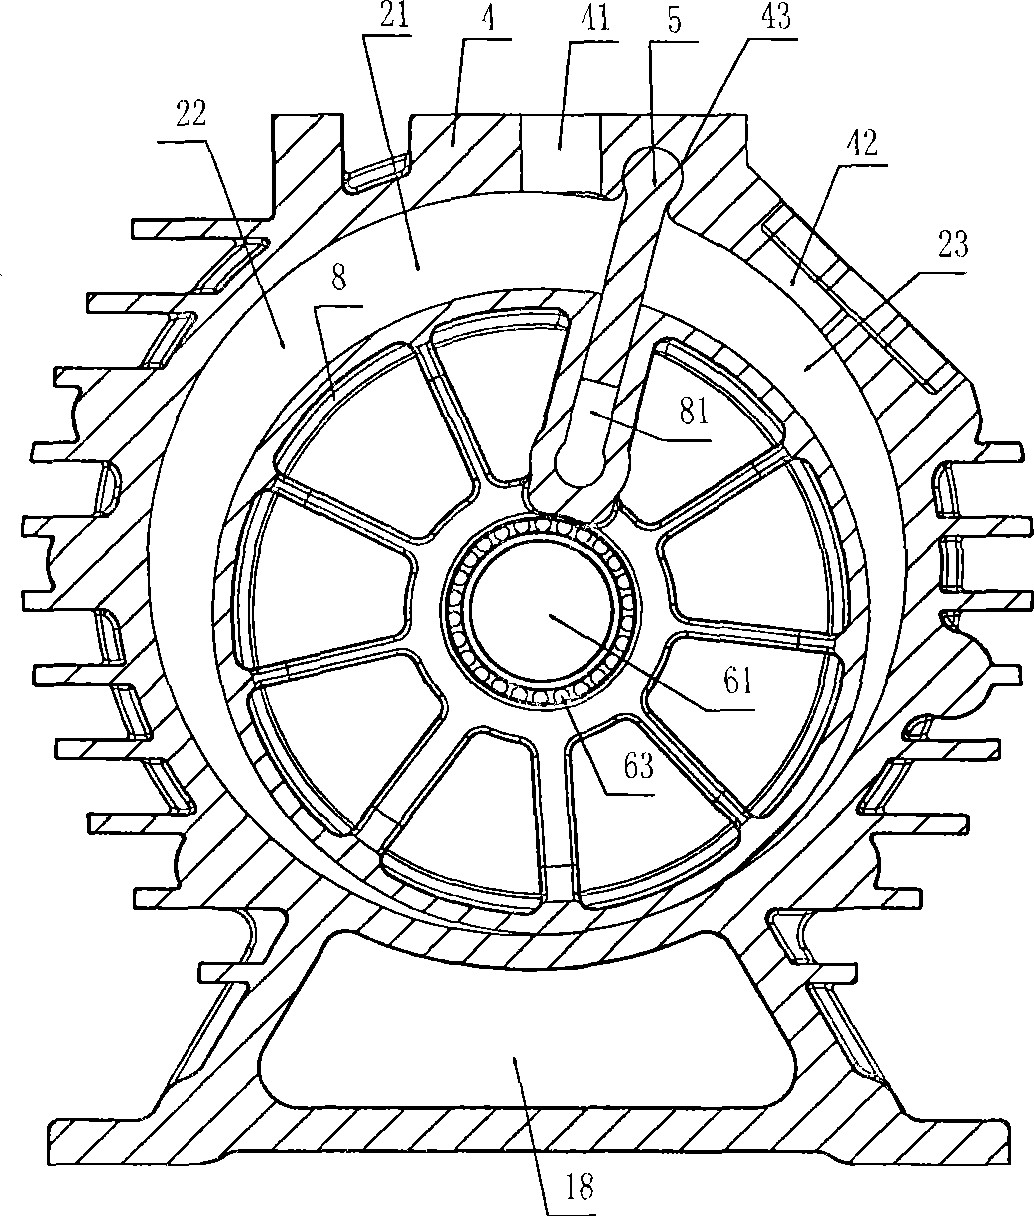 Frame head apparatus of translational rotary compressor